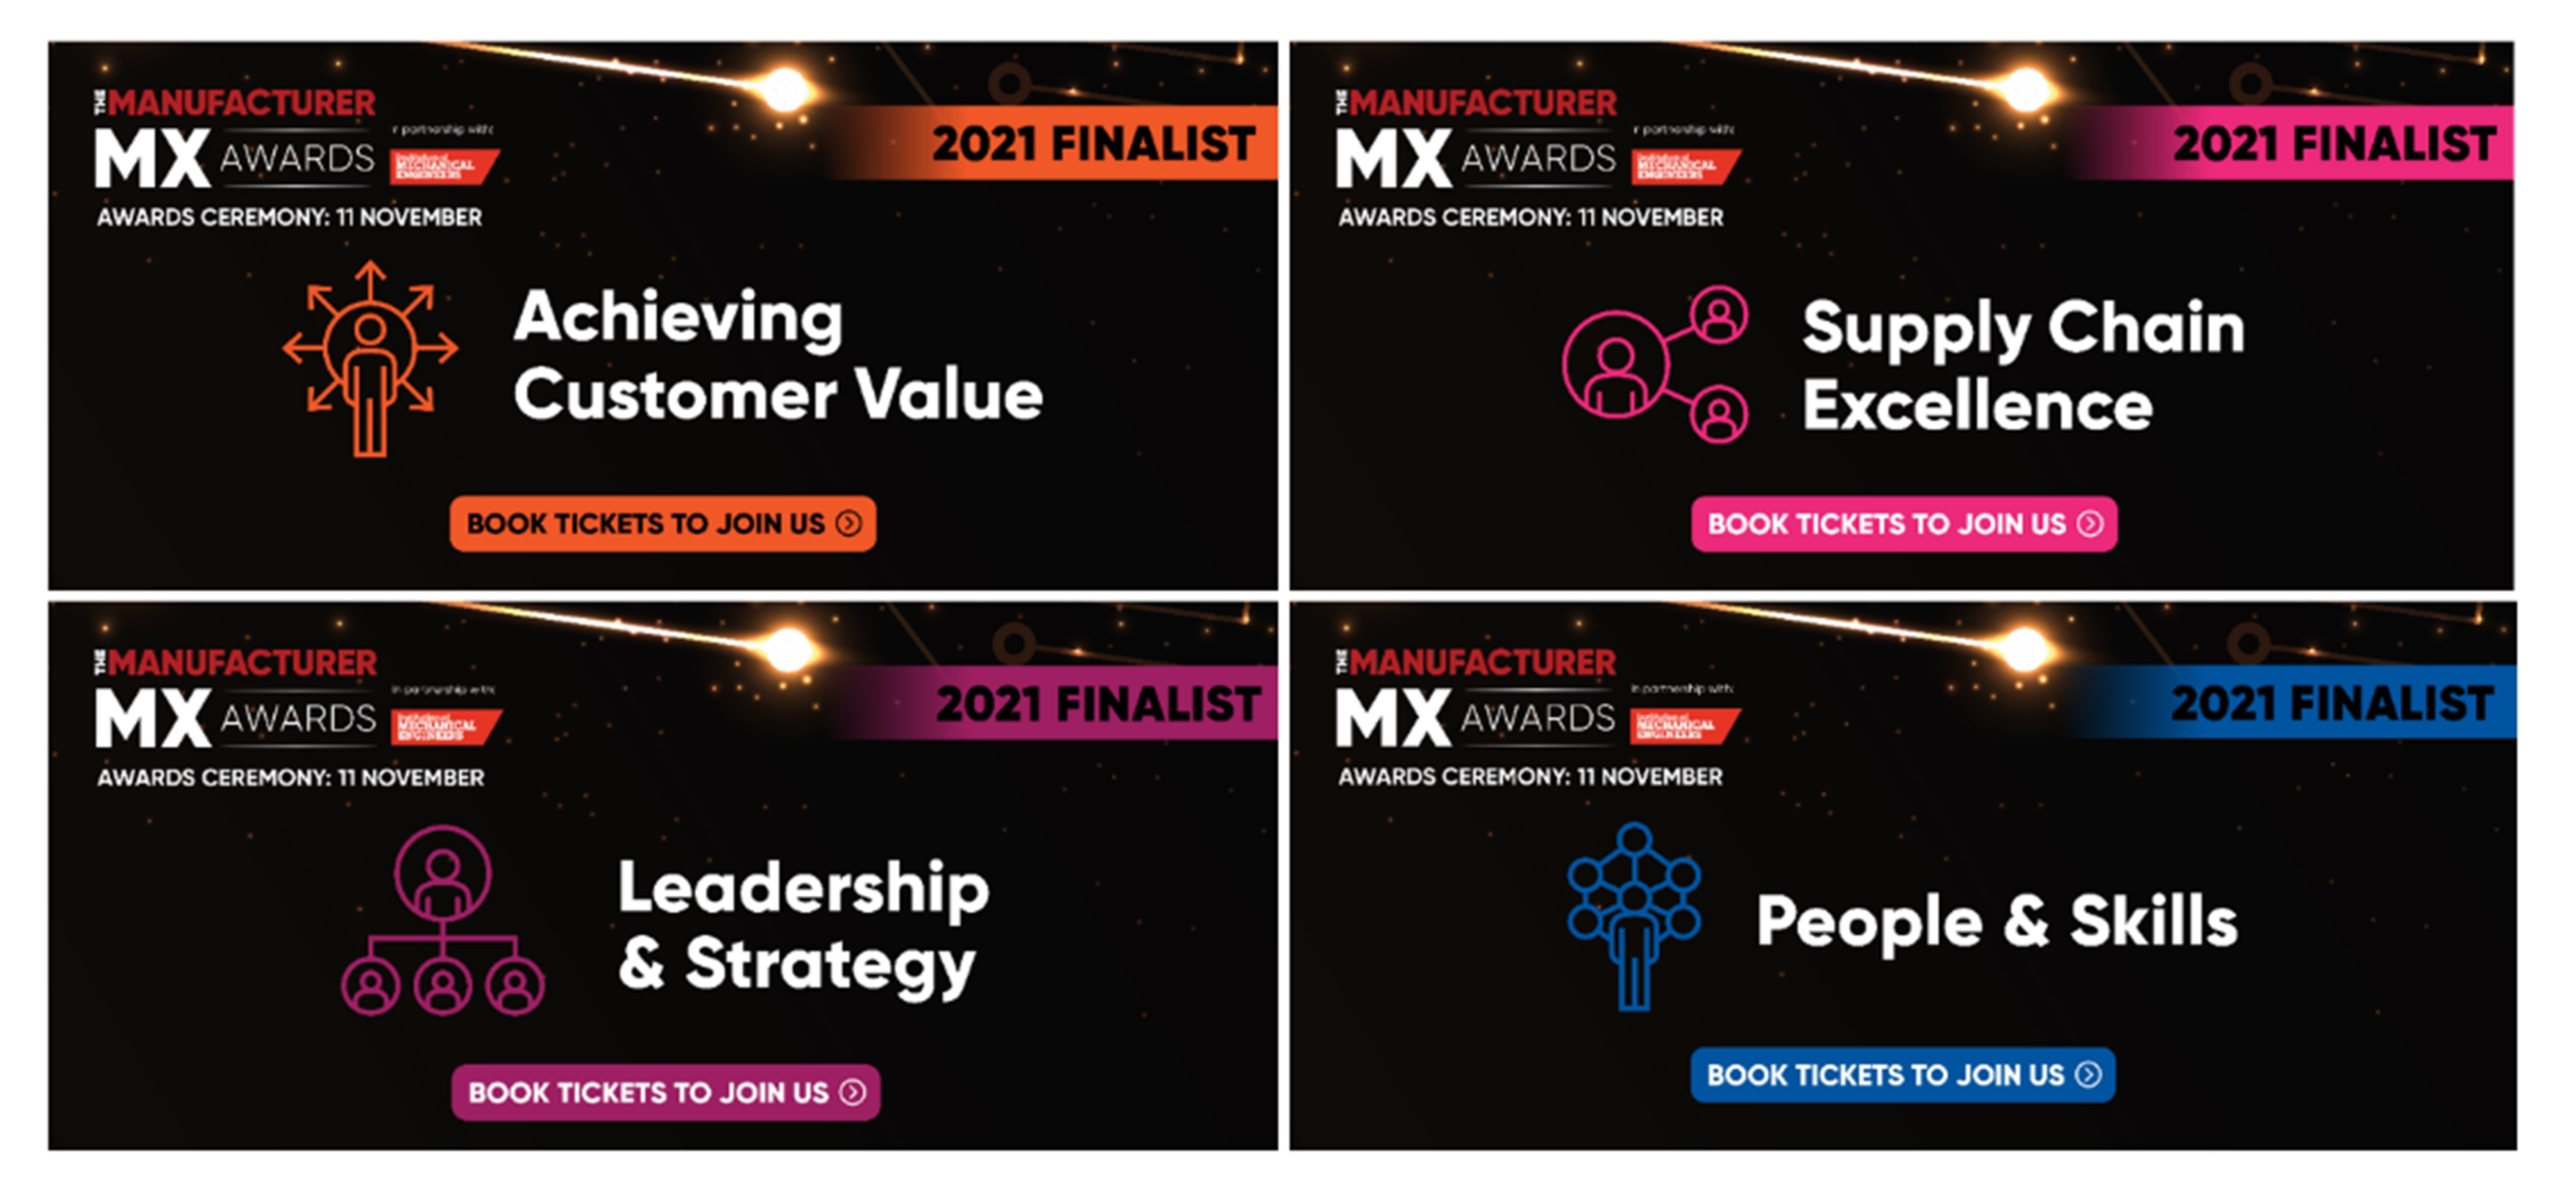 The Manufacturers MX Awards 2021 Finalist